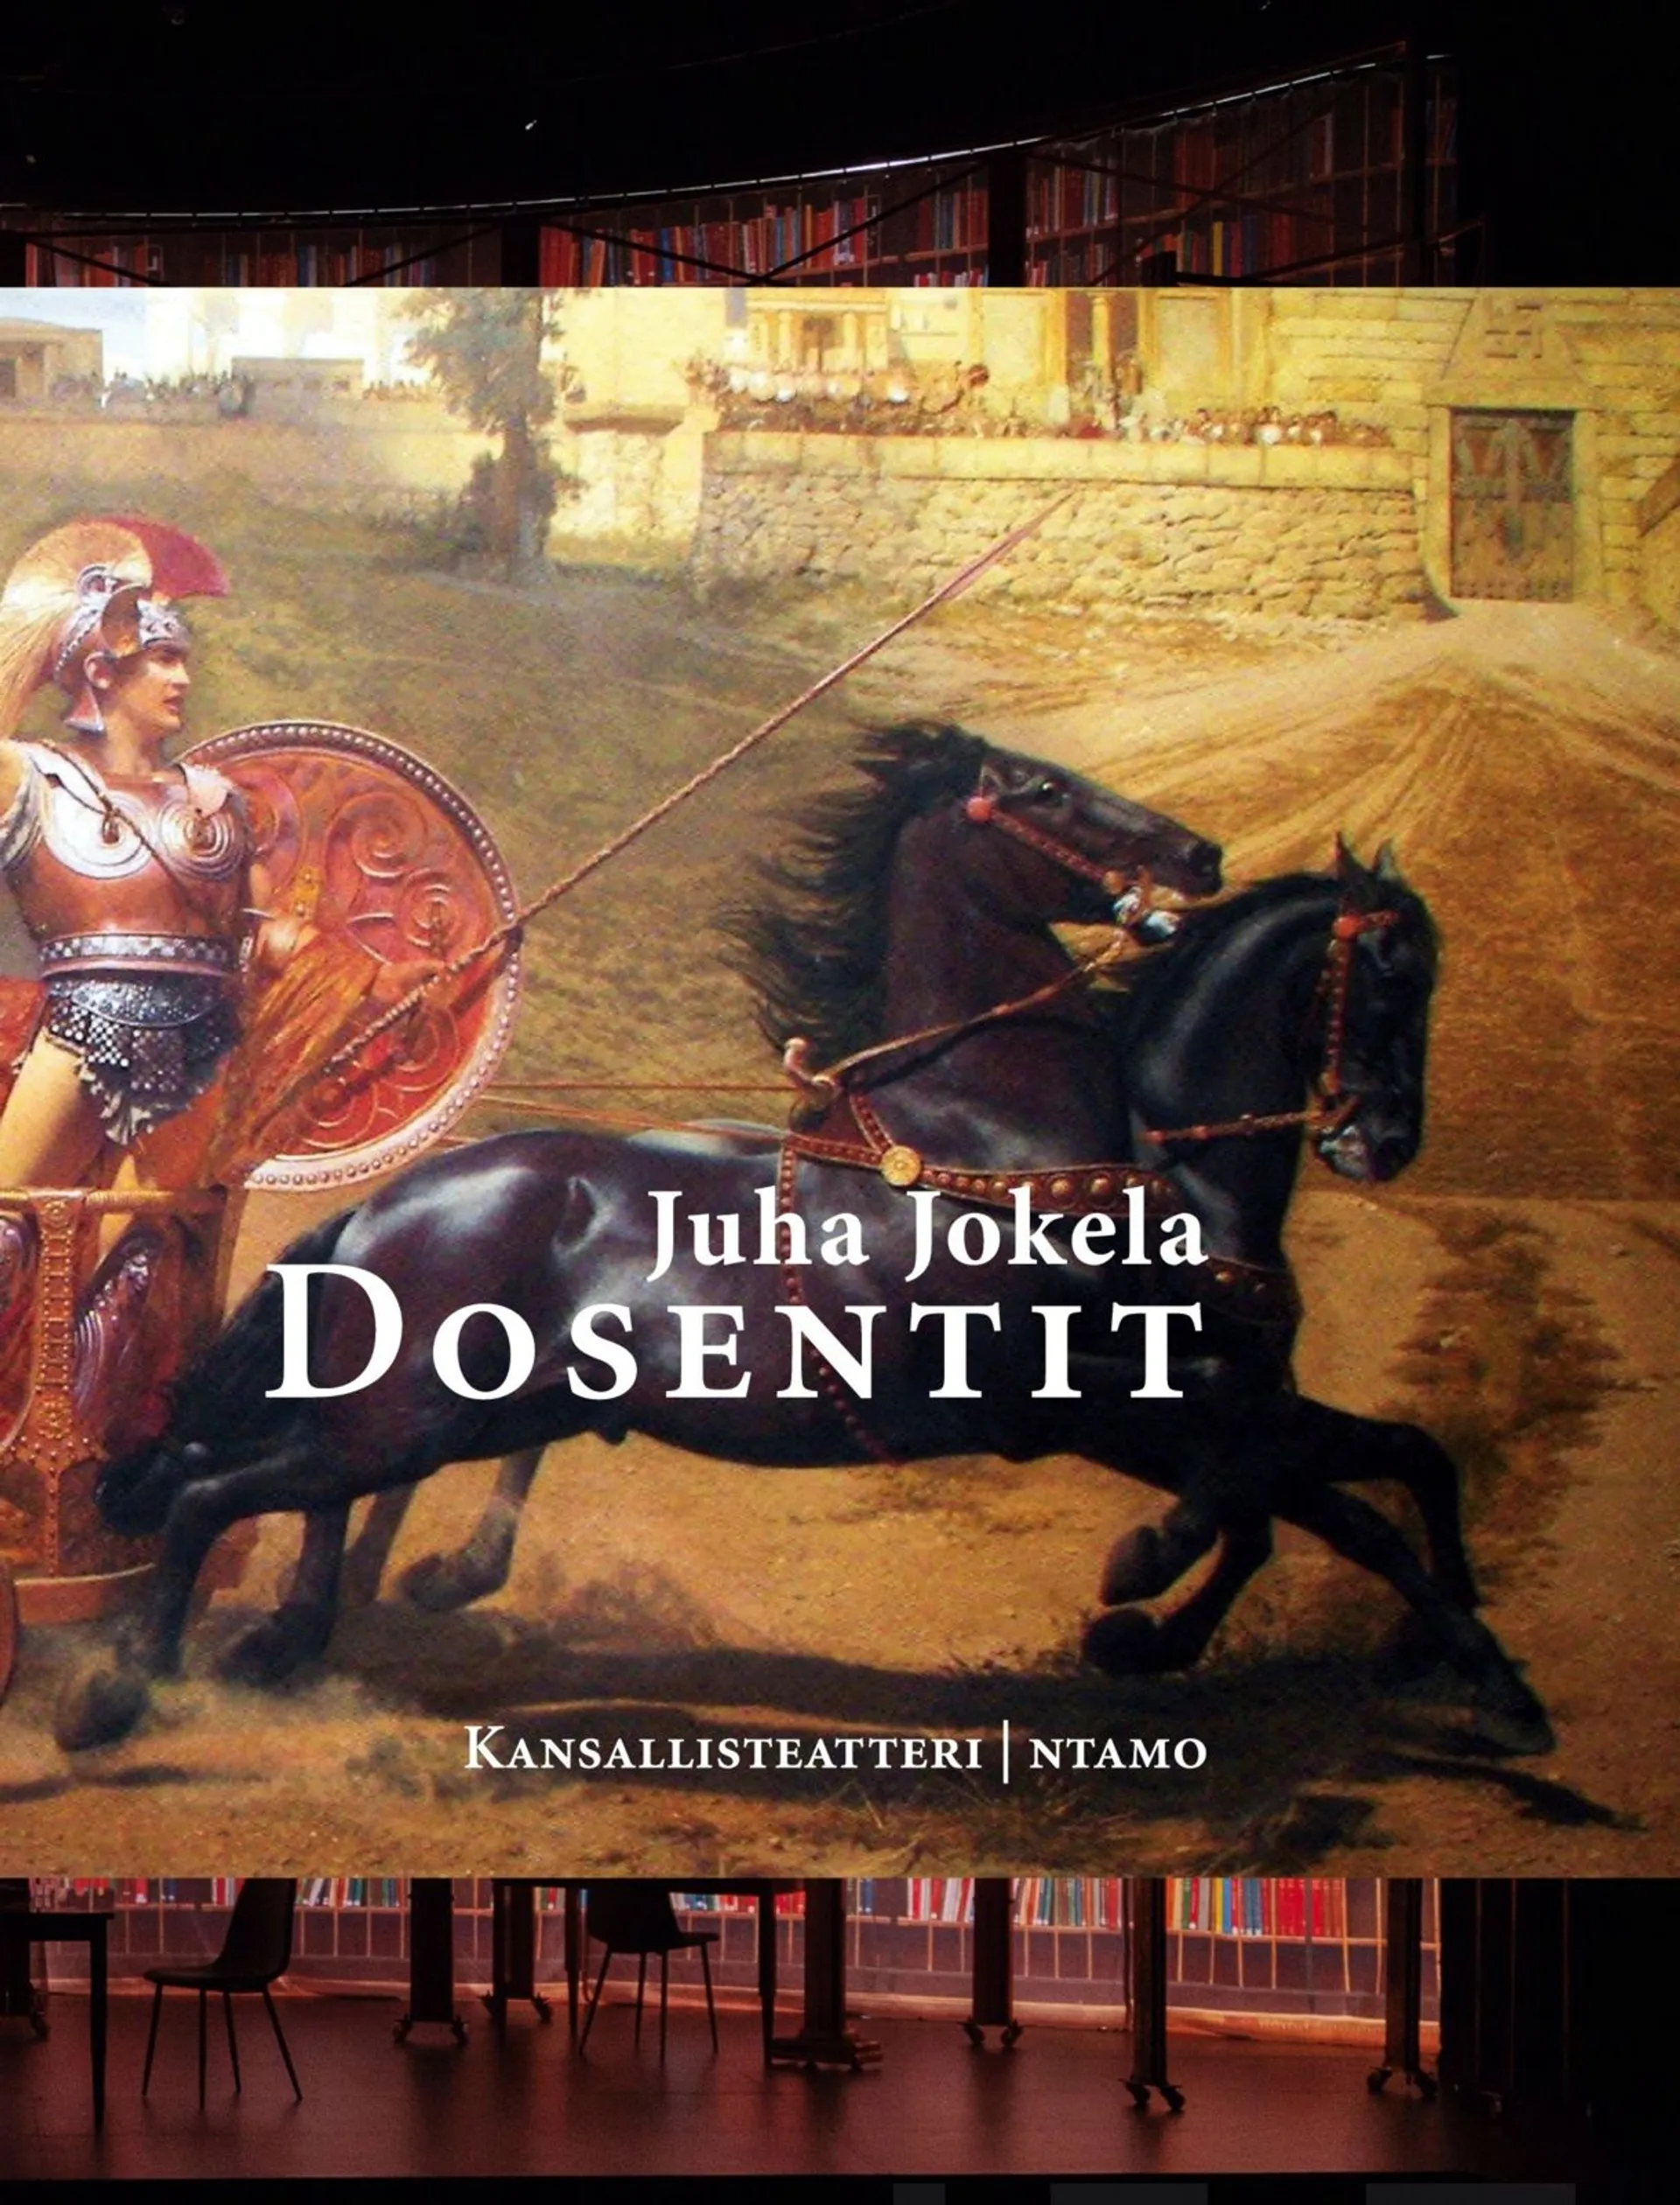 Jokela, Dosentit